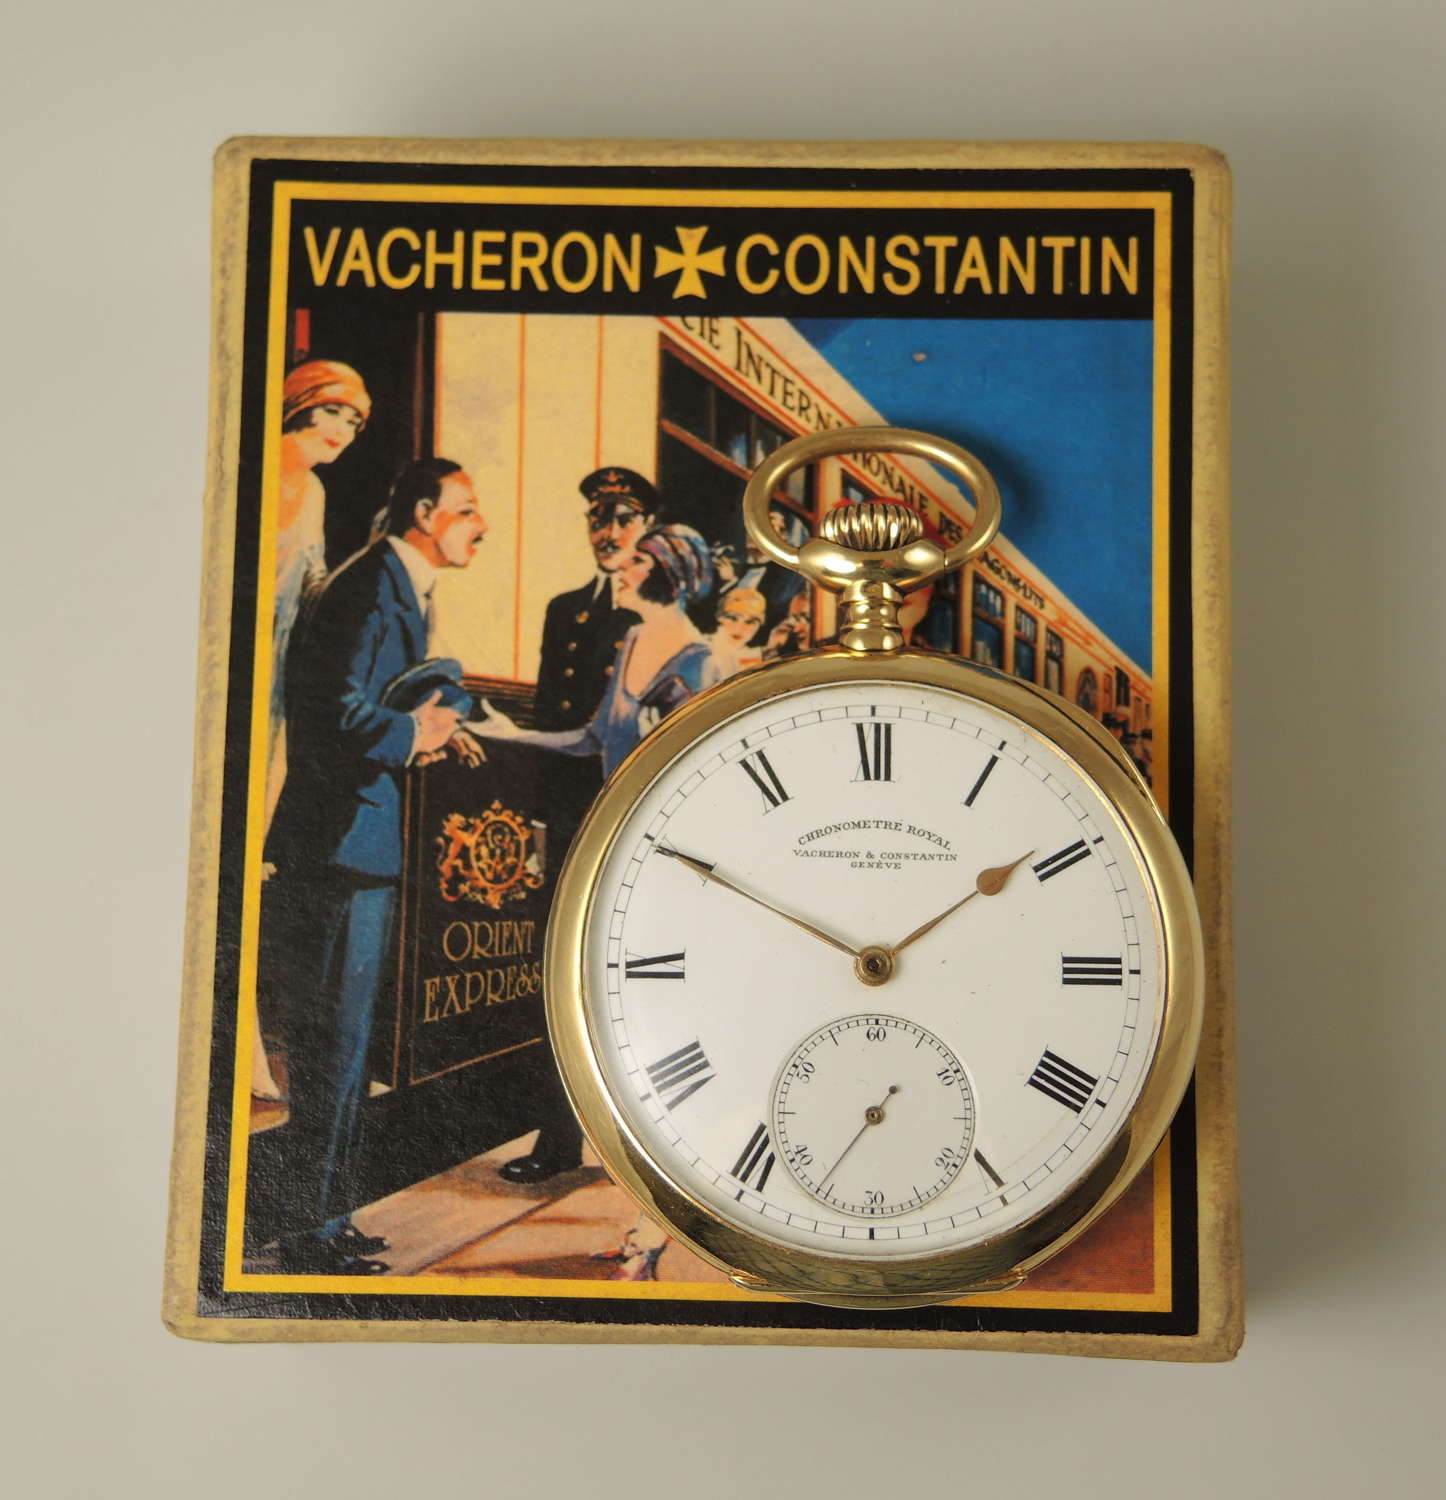 Genuine 18K gold Vacheron & Constantin Chronometre Royal c1915